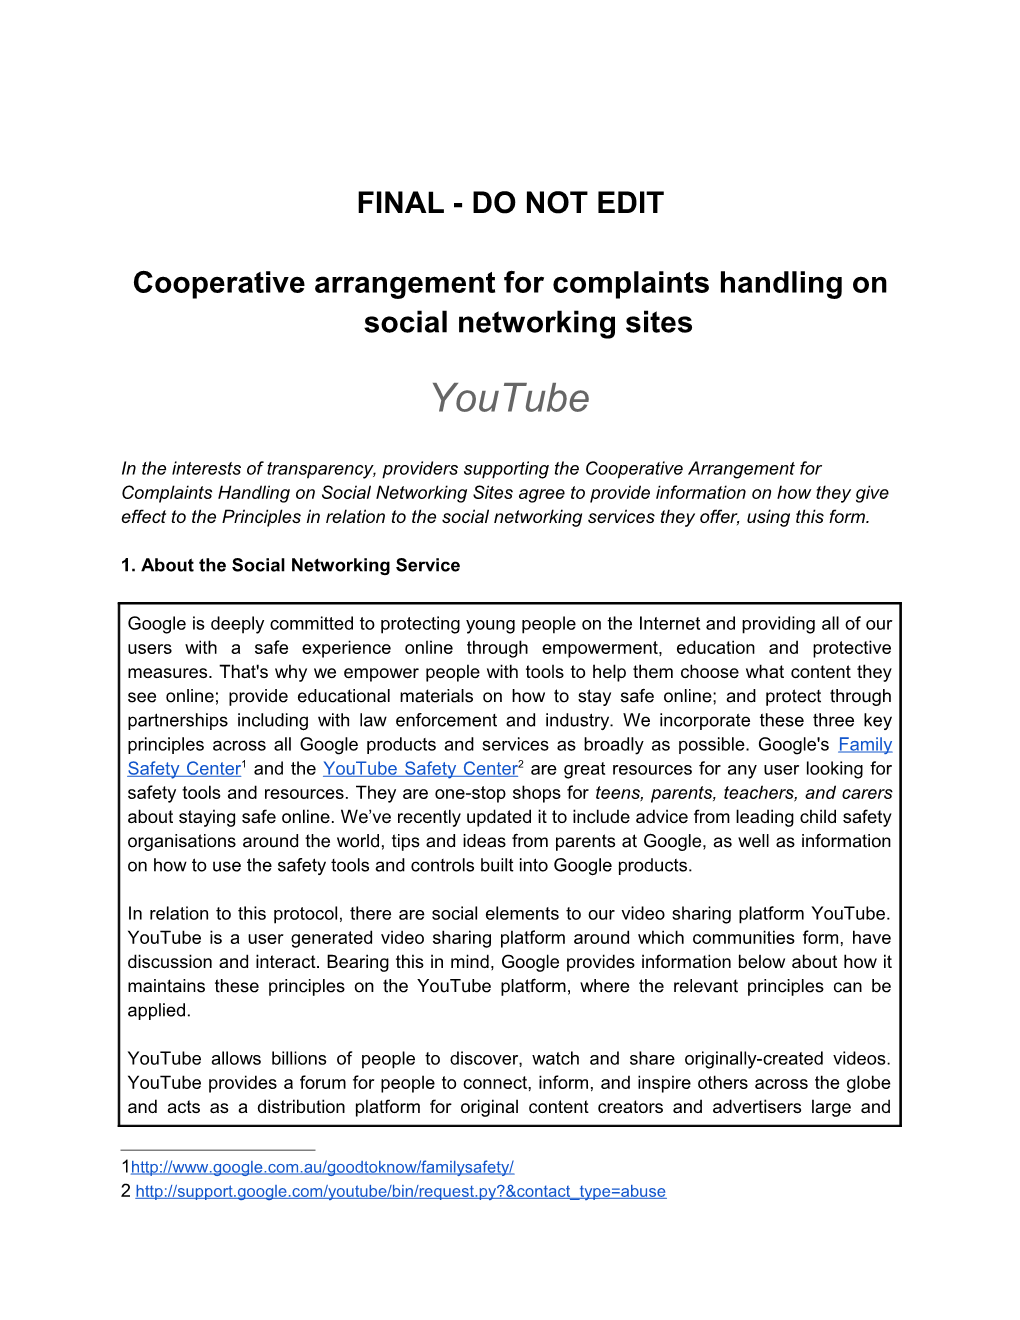 Cooperative Arrangement for Complaints Handling on Social Networking Sites